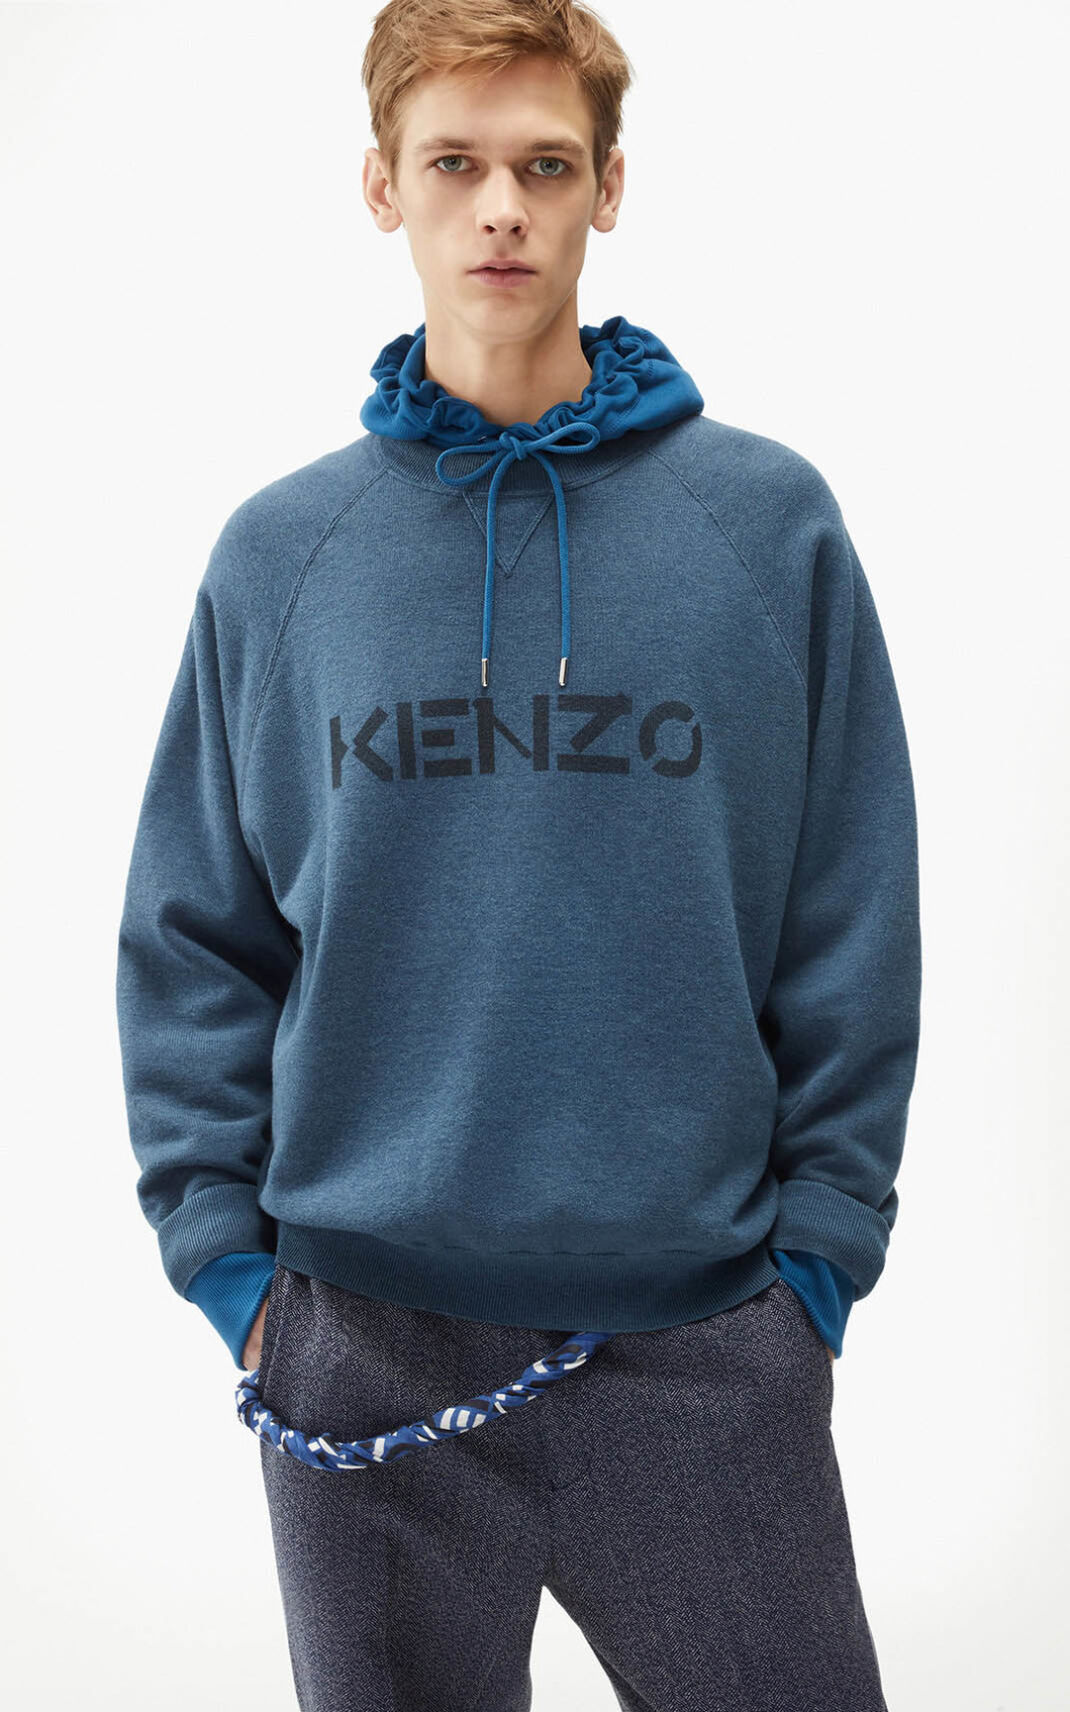 Jerseys Kenzo logo Hombre Azules CRA837640